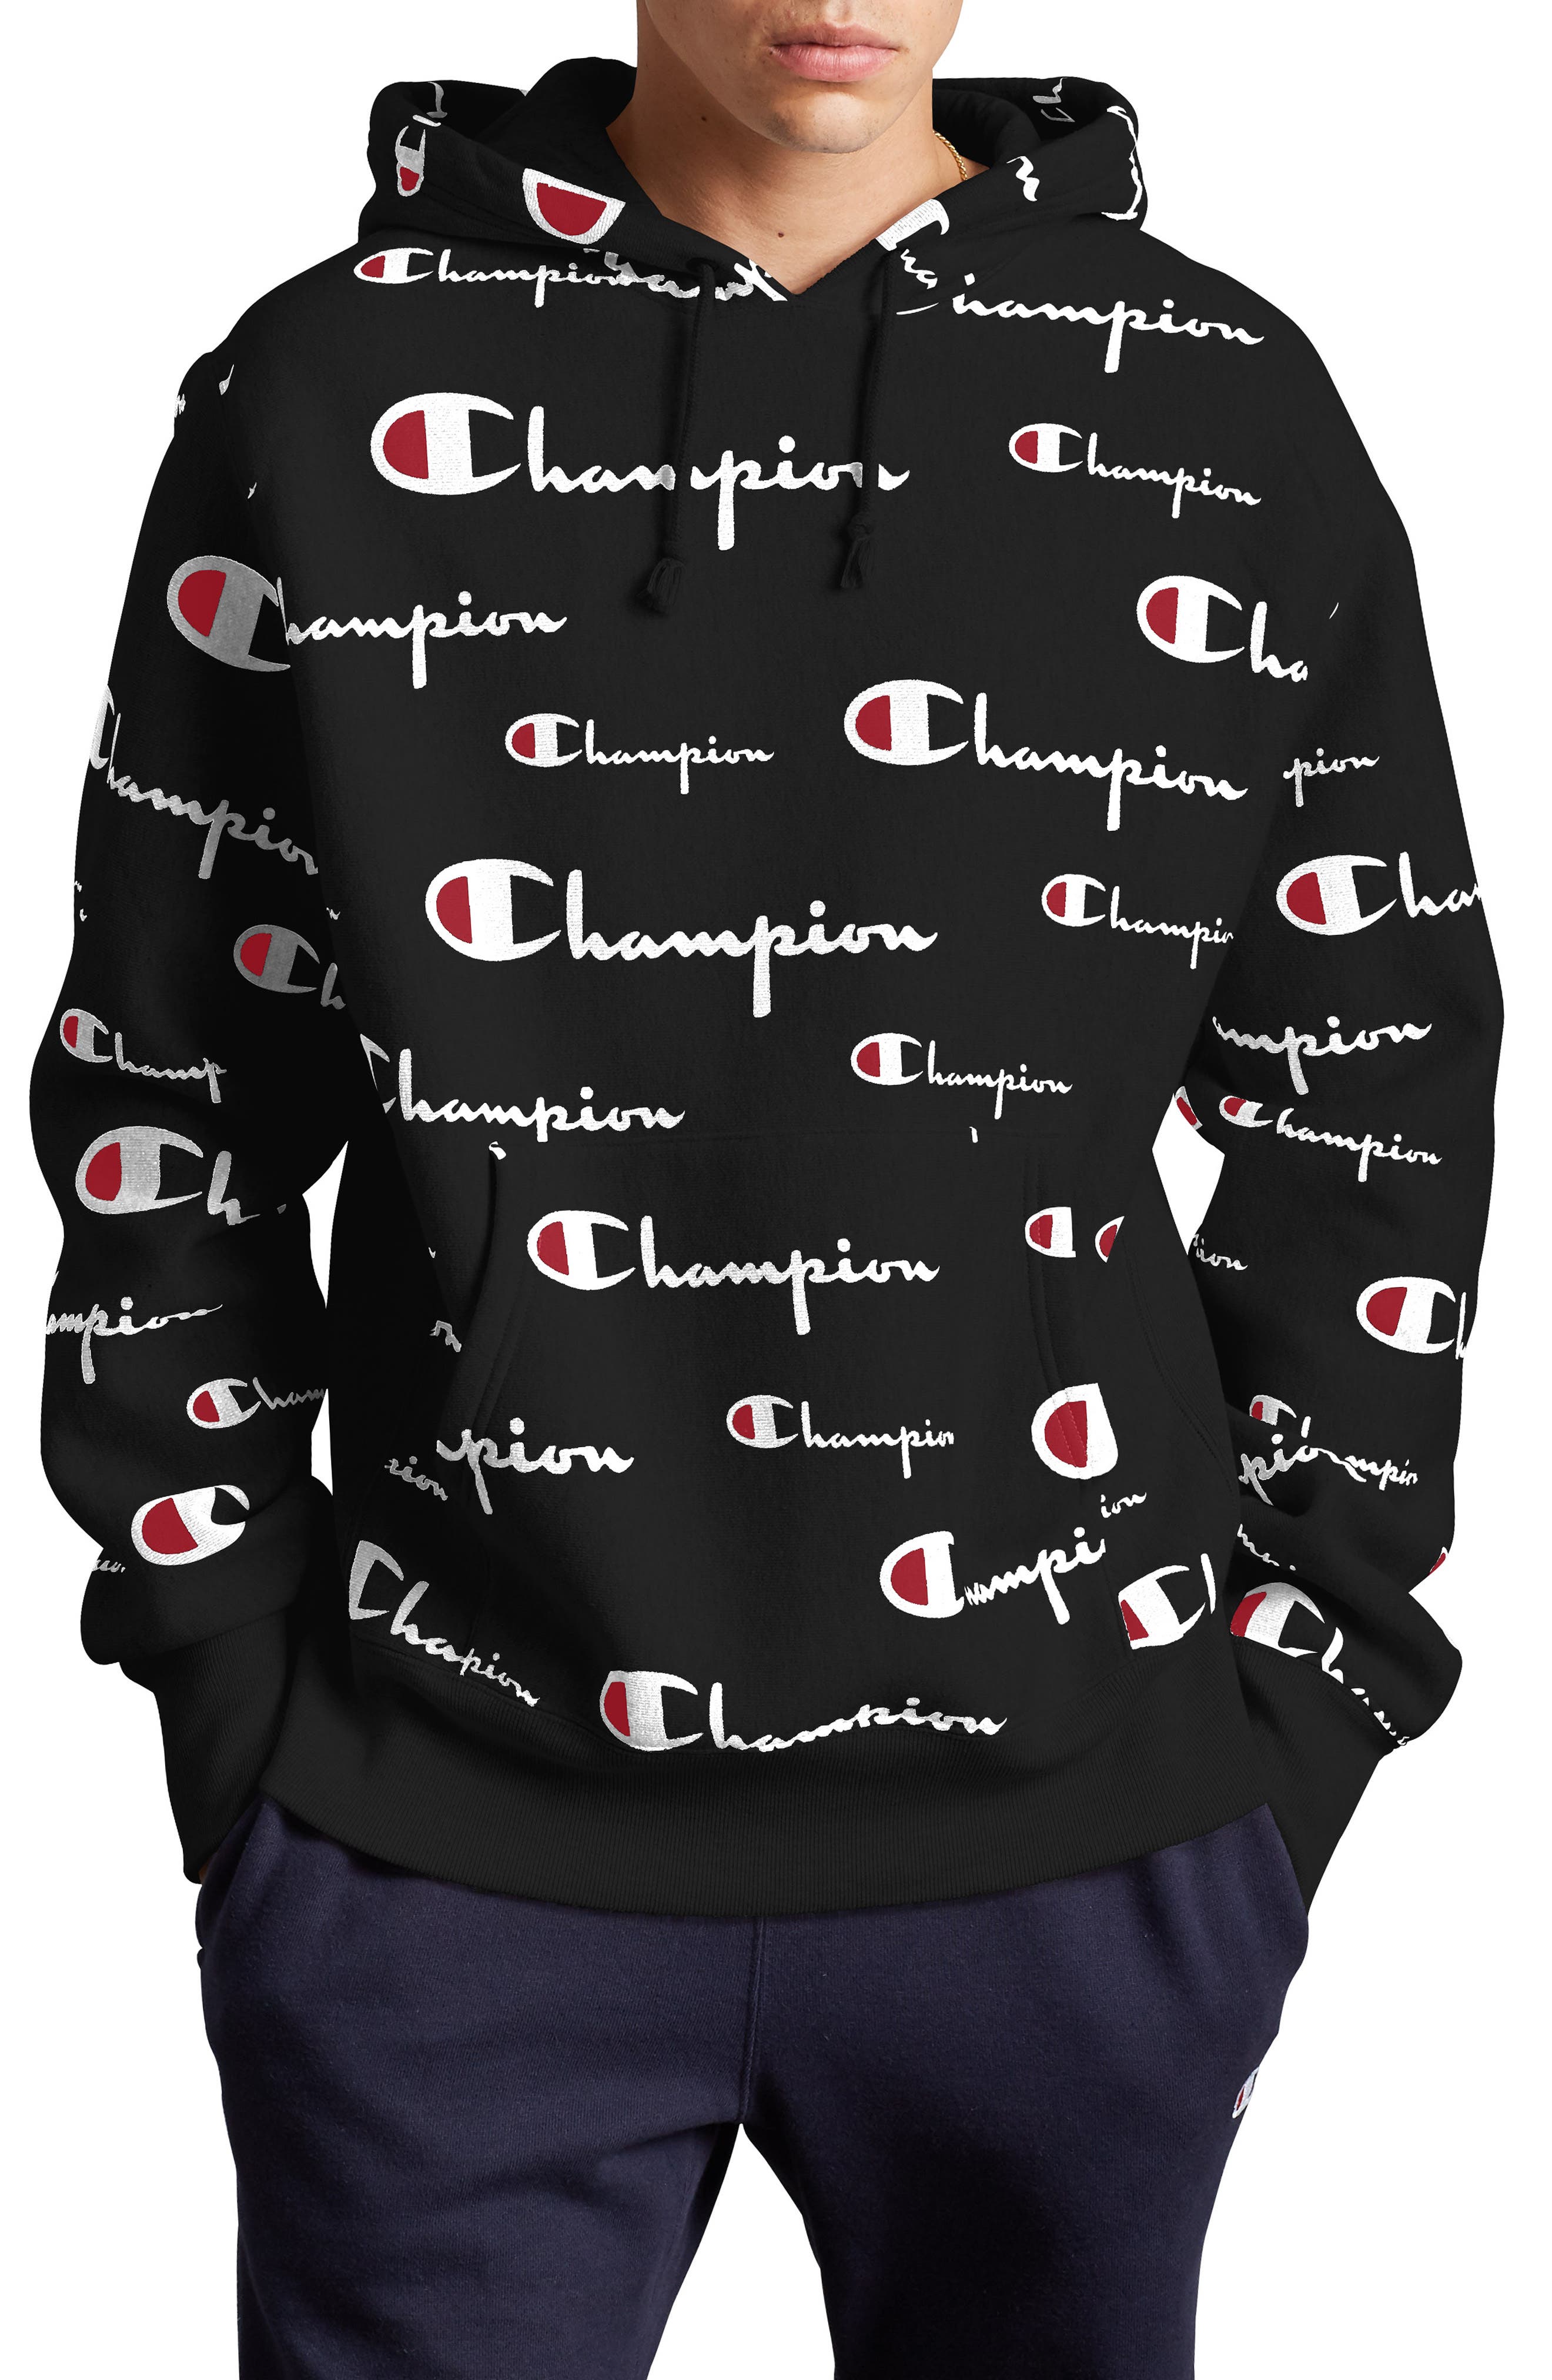 unique champion hoodies